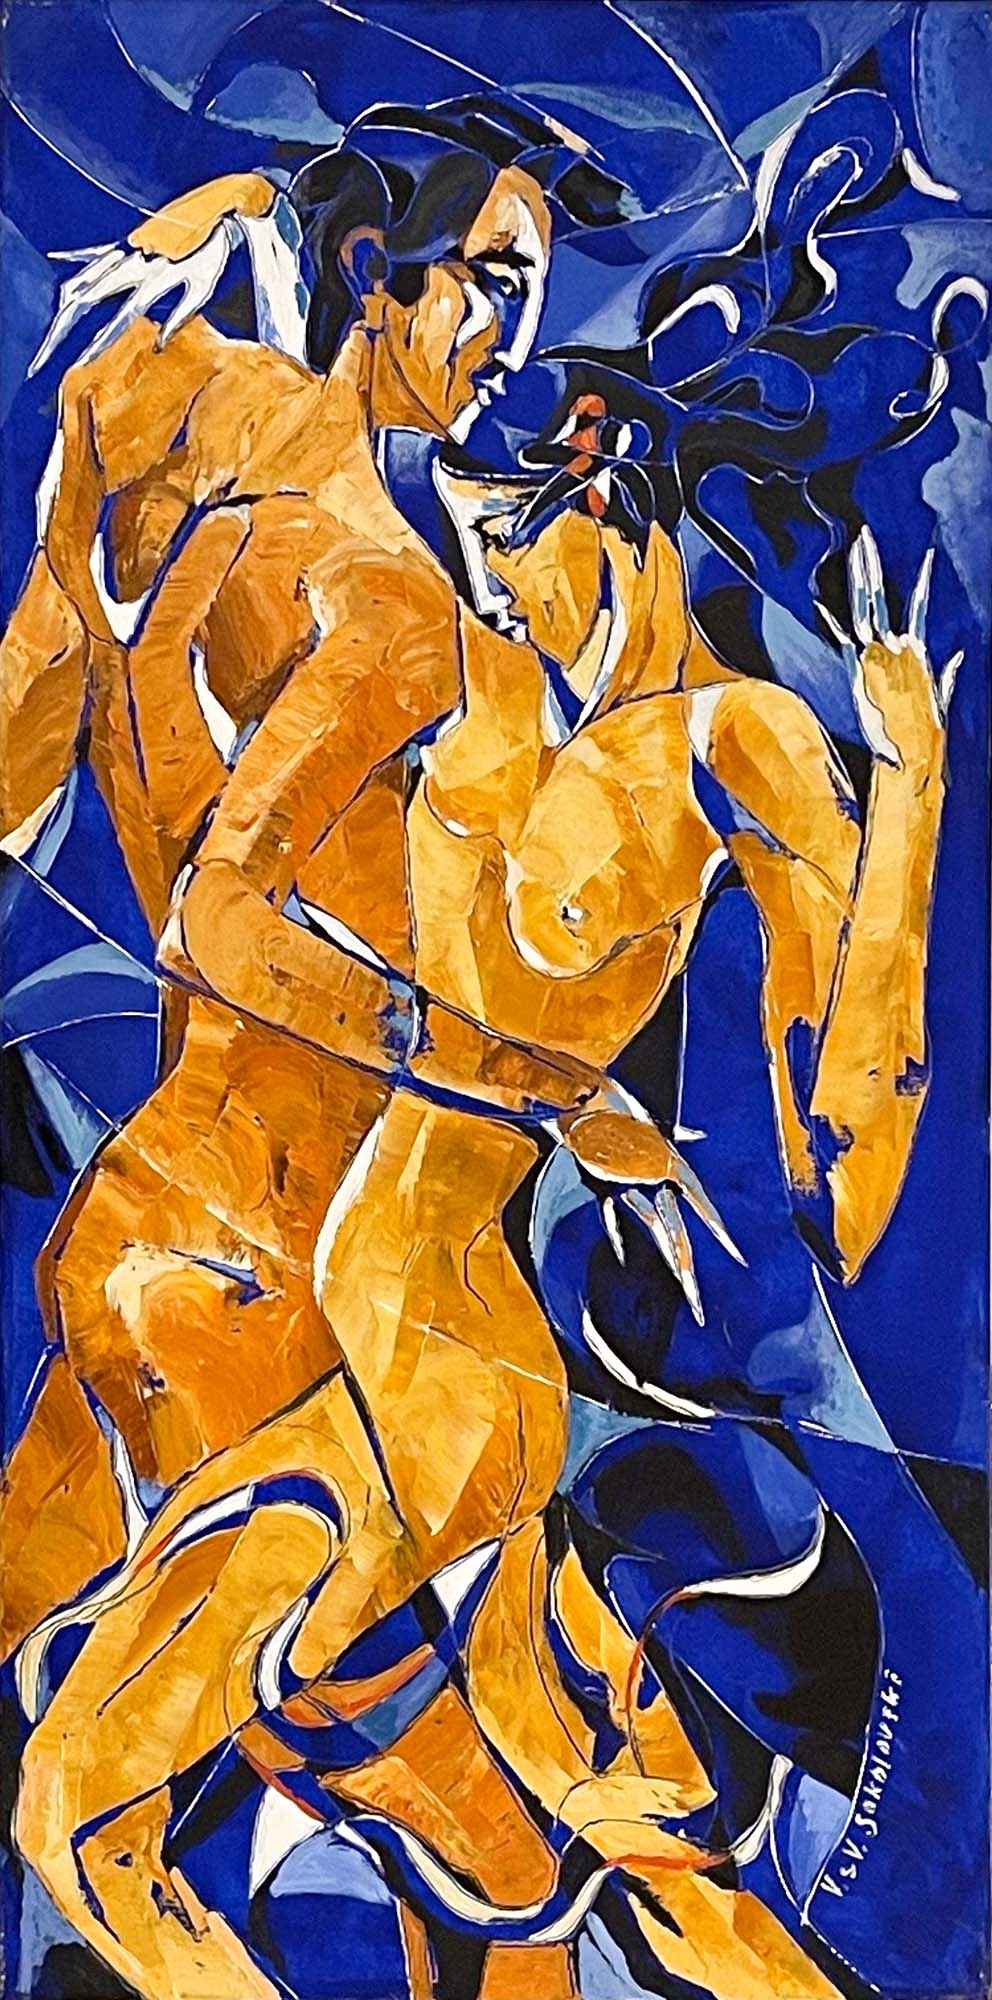 Abstract Art. Title: Tango Blue, Original Oil_36x18 in by Contemporary Canadian Artist Valeri Sokolovski.